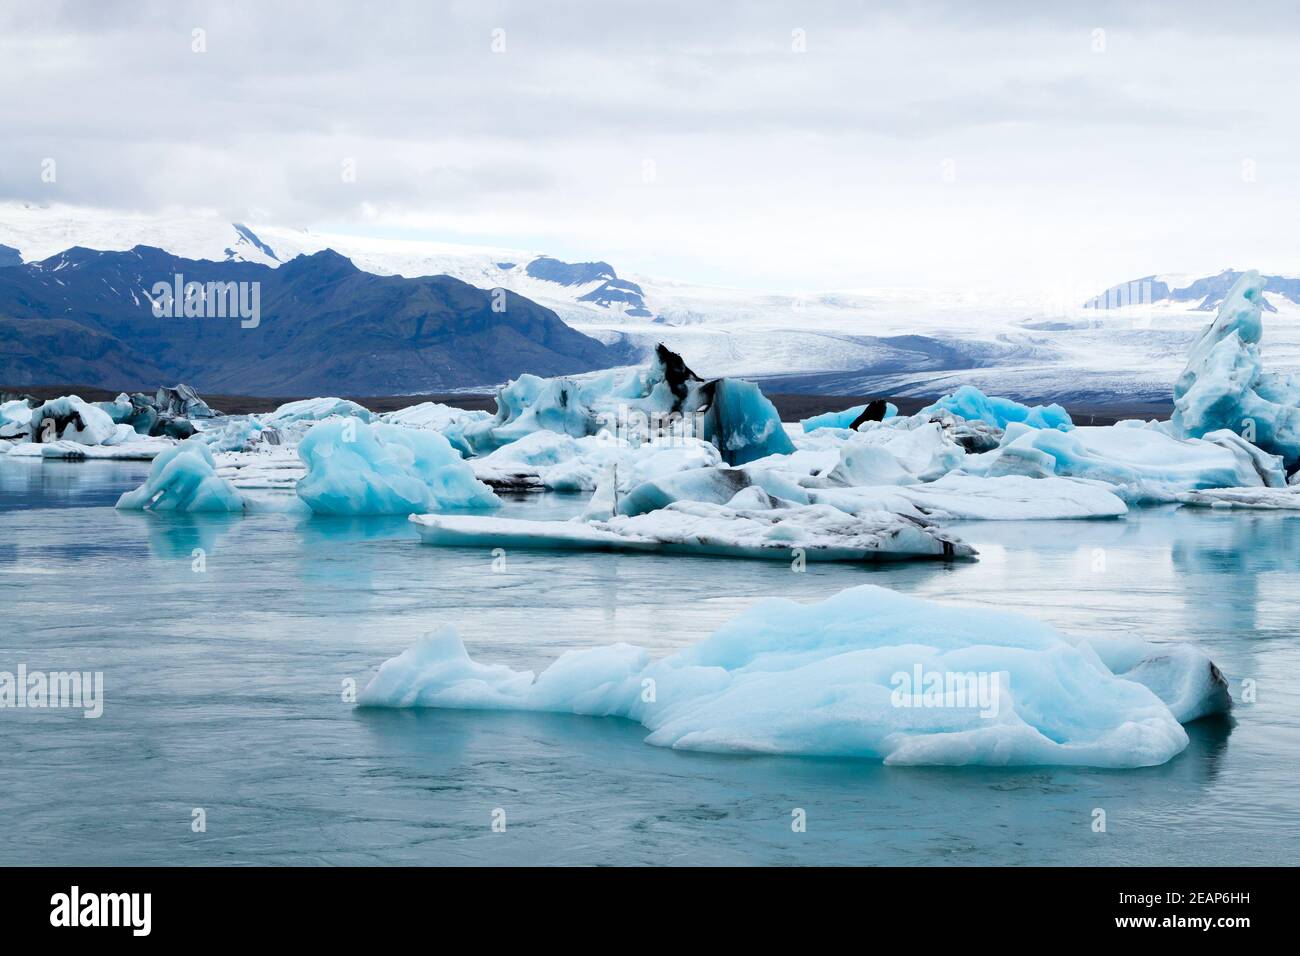 Icebergs on water, Jokulsarlon glacial lake, Iceland Stock Photo